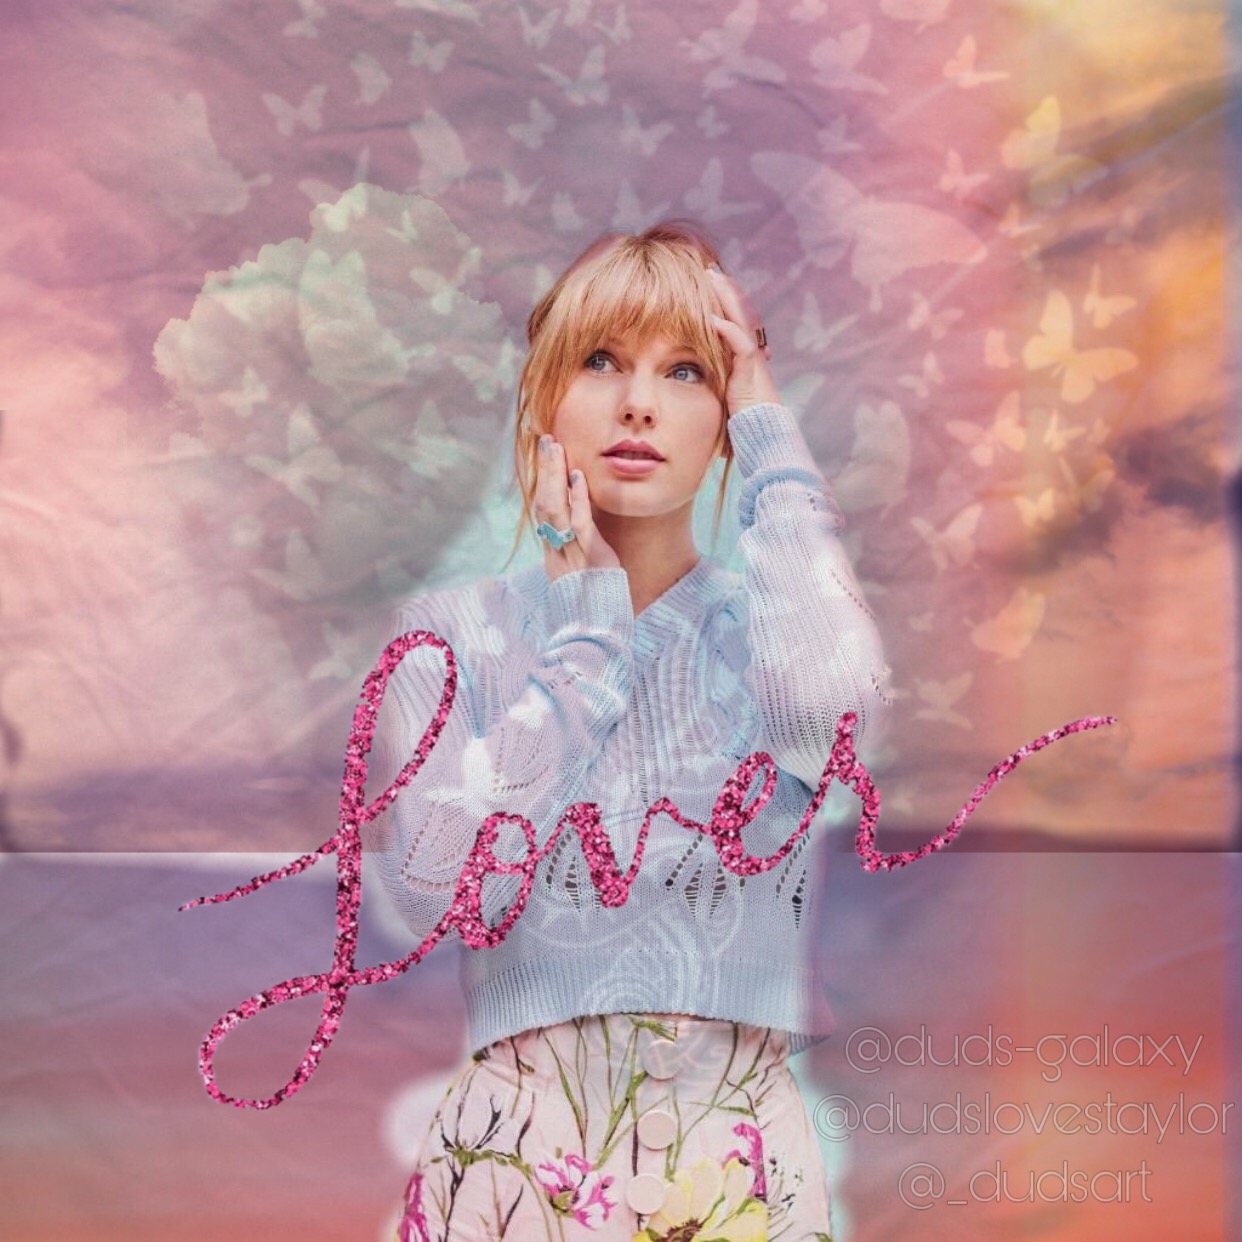 Hd Exclusive Lover Taylor Swift Album Art Mujtamega